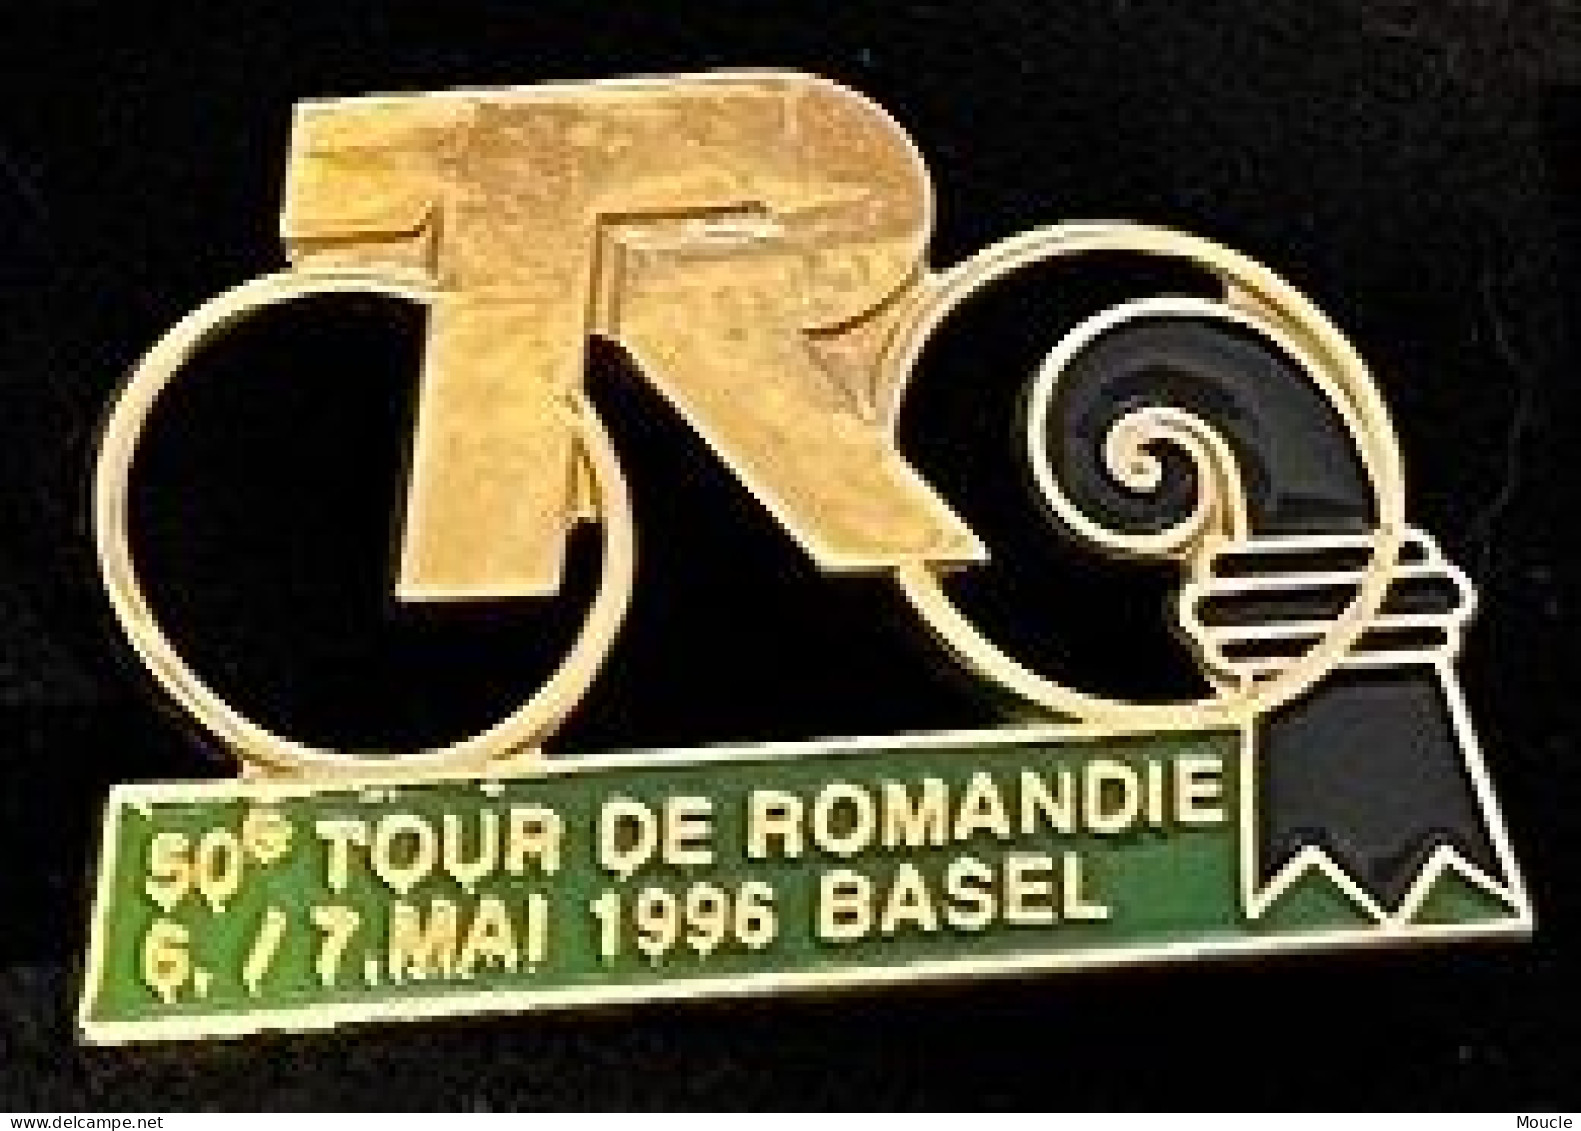 CYCLISME - VELO - BIKE - CYCLISTE - CYCLES - 50ème TOUR DE ROMANDIE 6-7 MAI 1996 - BALE - BASEL - SUISSE -SCHWEIZ-(33) - Cyclisme